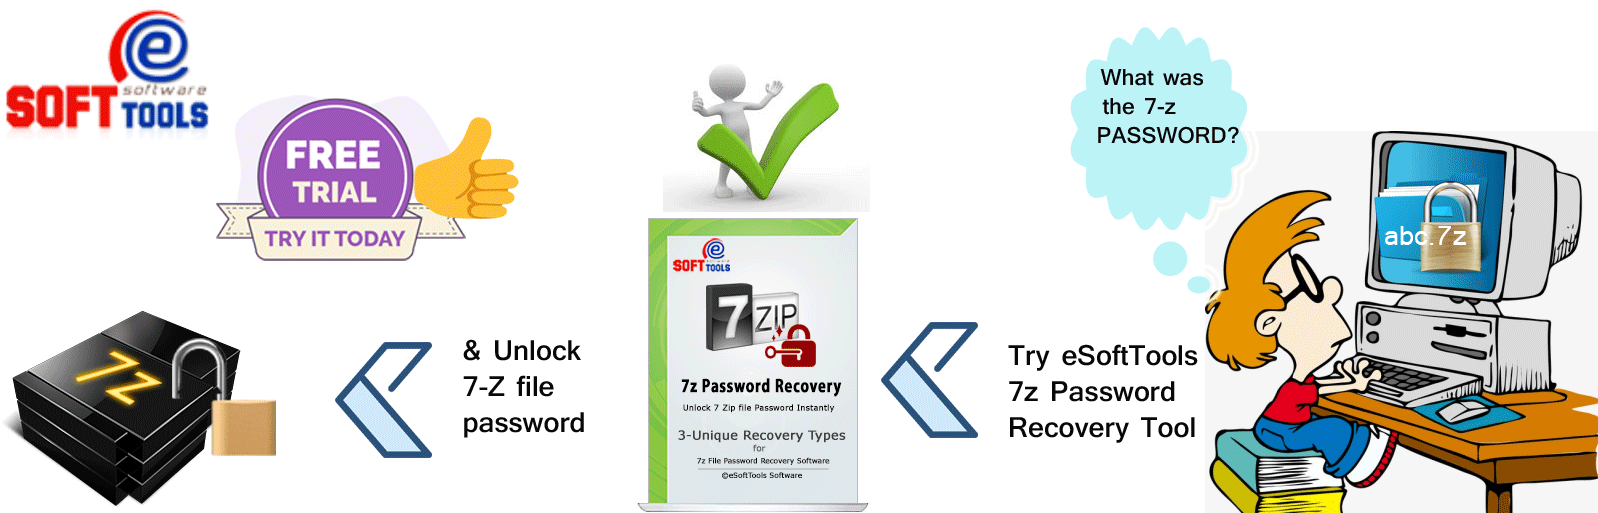 How to Open Password Protected 7zip File?